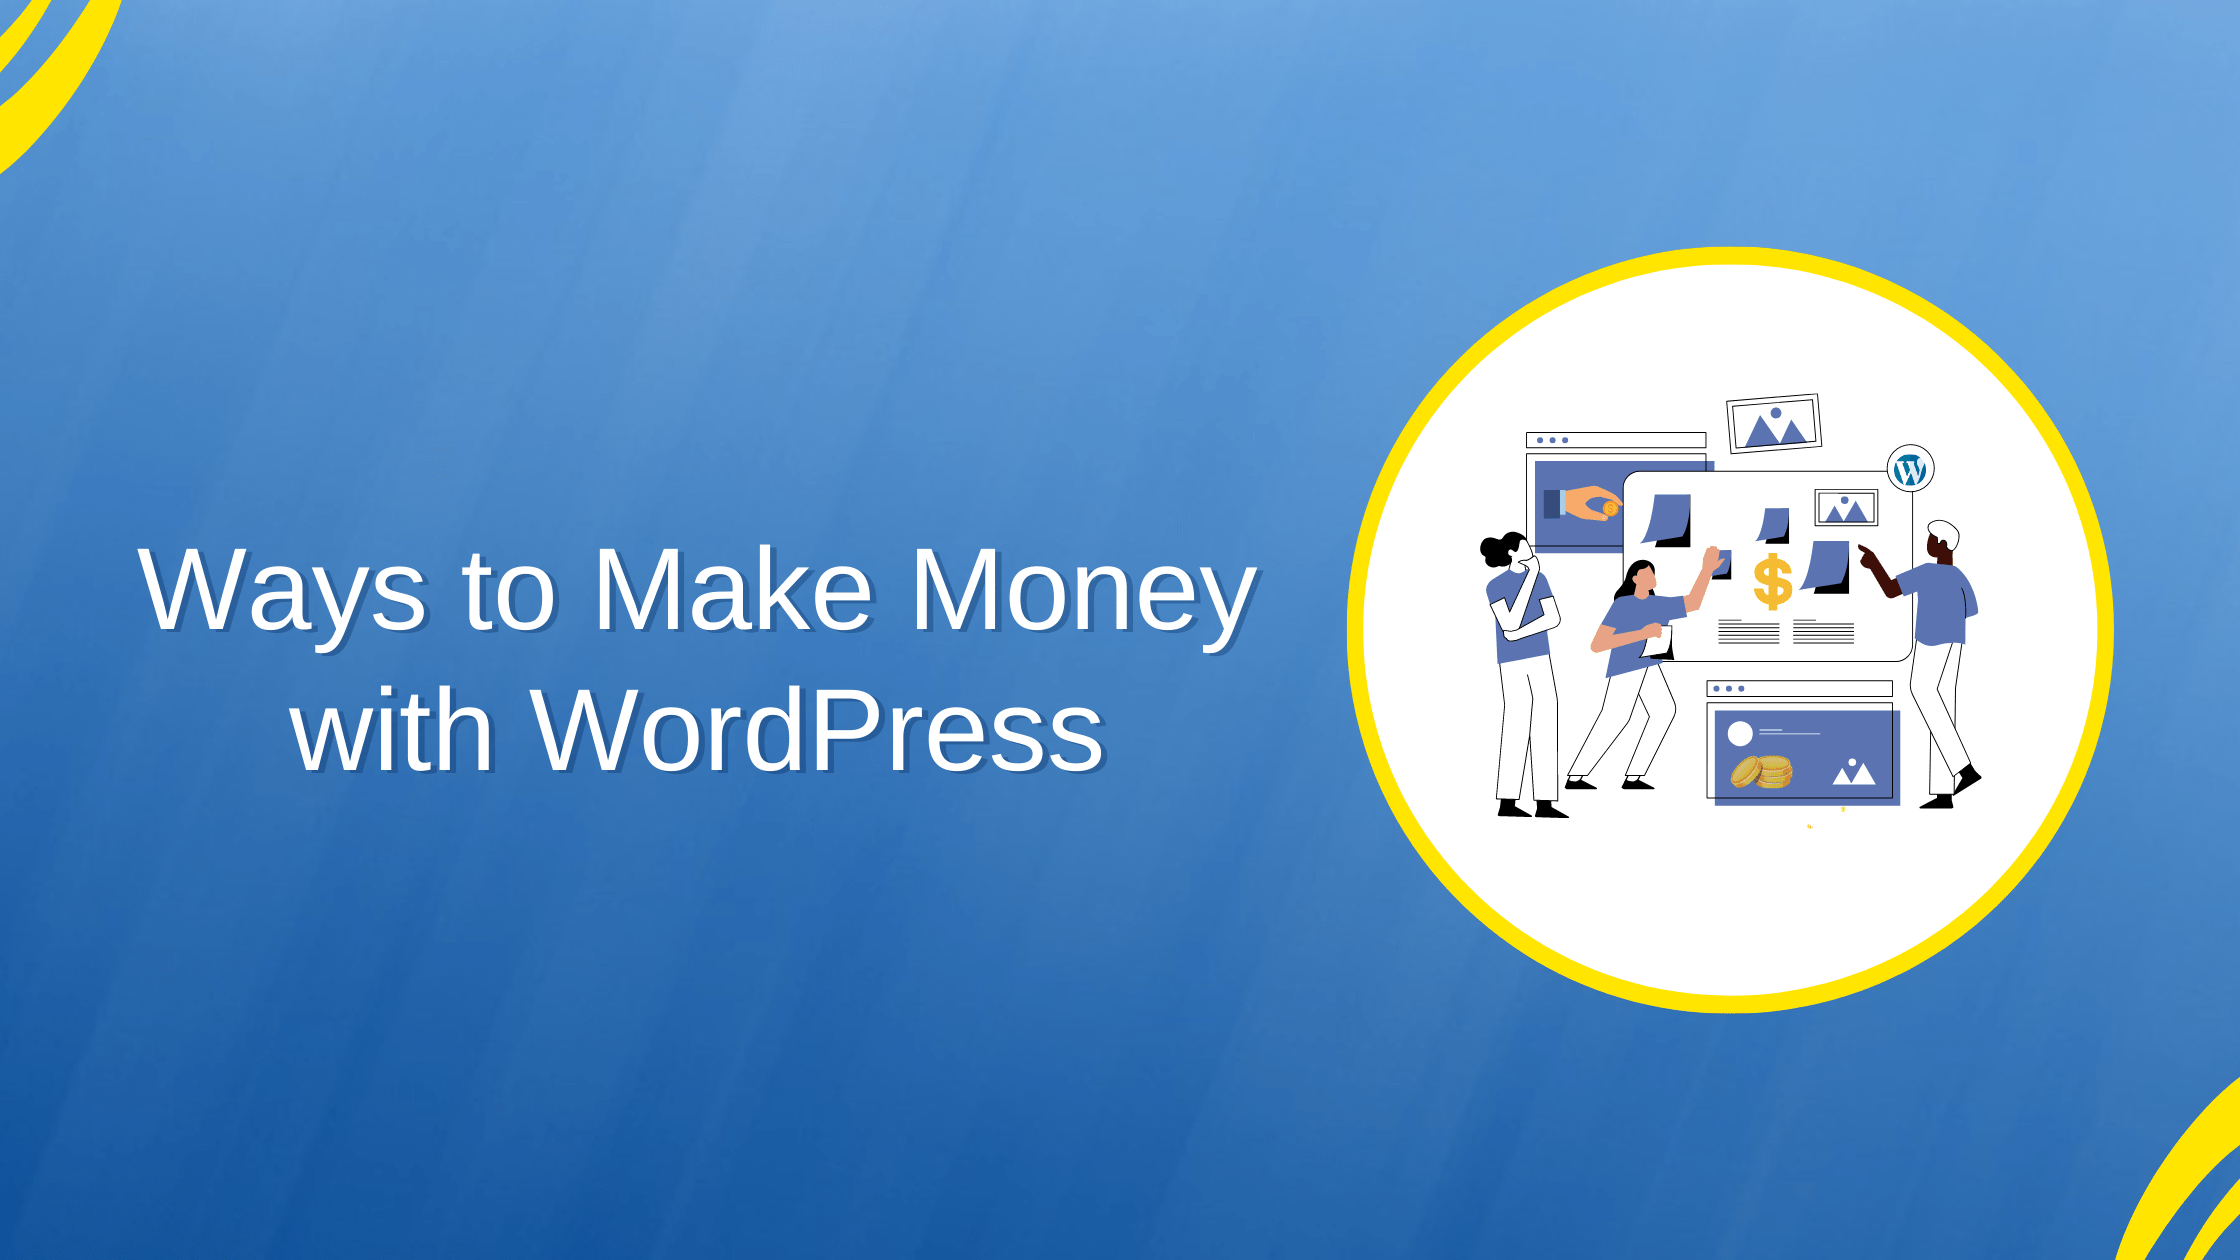 7 Ways to Make Money with WordPress